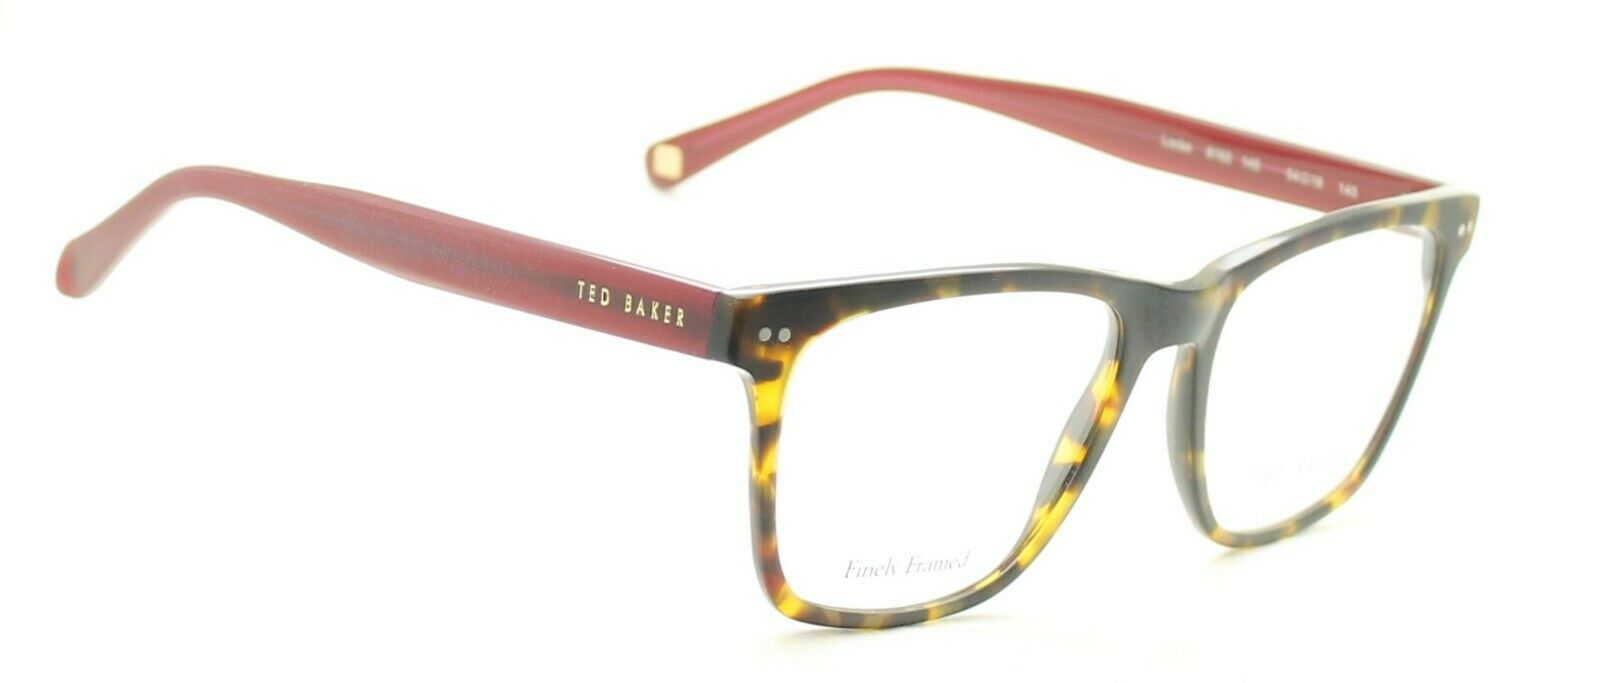 TED BAKER Locke 8162 145 54mm Eyewear FRAMES Glasses Eyeglasses RX Optical -New